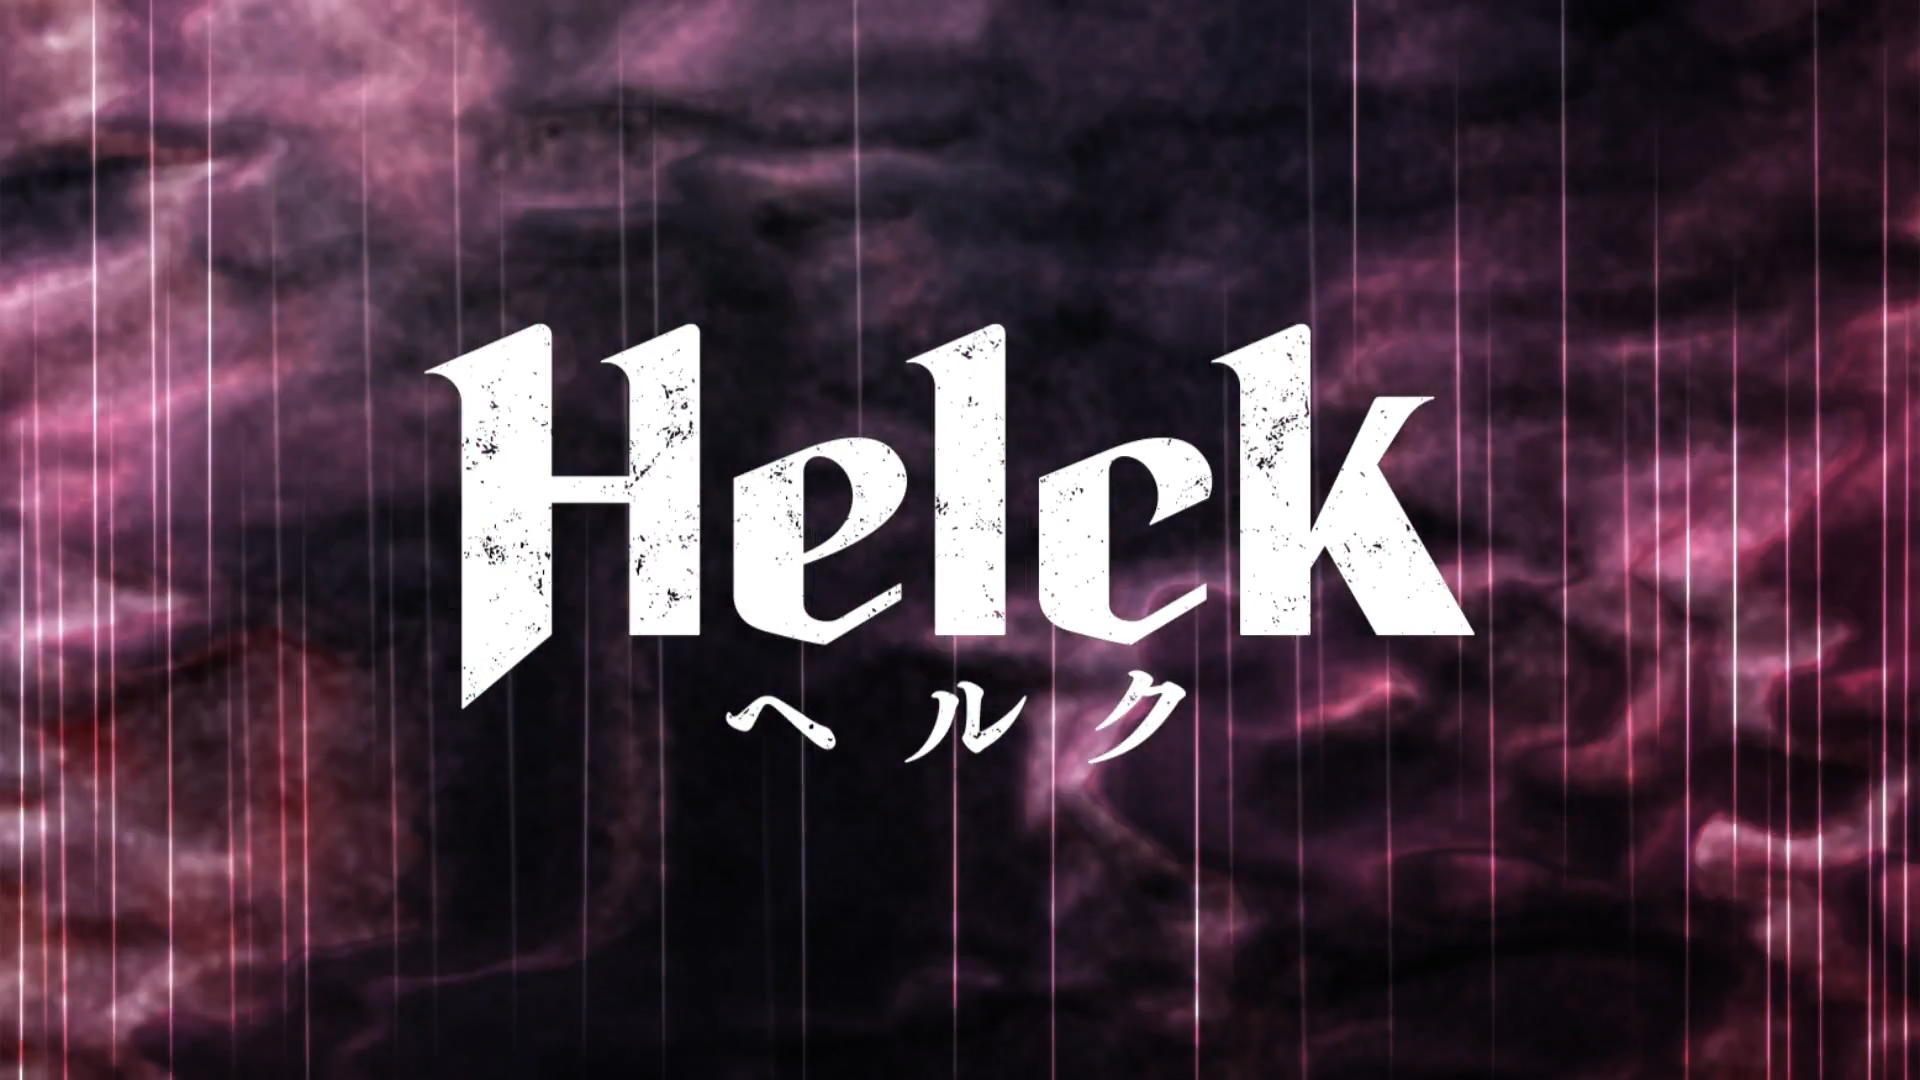 Helck  Хелк - 09  Bg Mtl Sub  - Vbox7